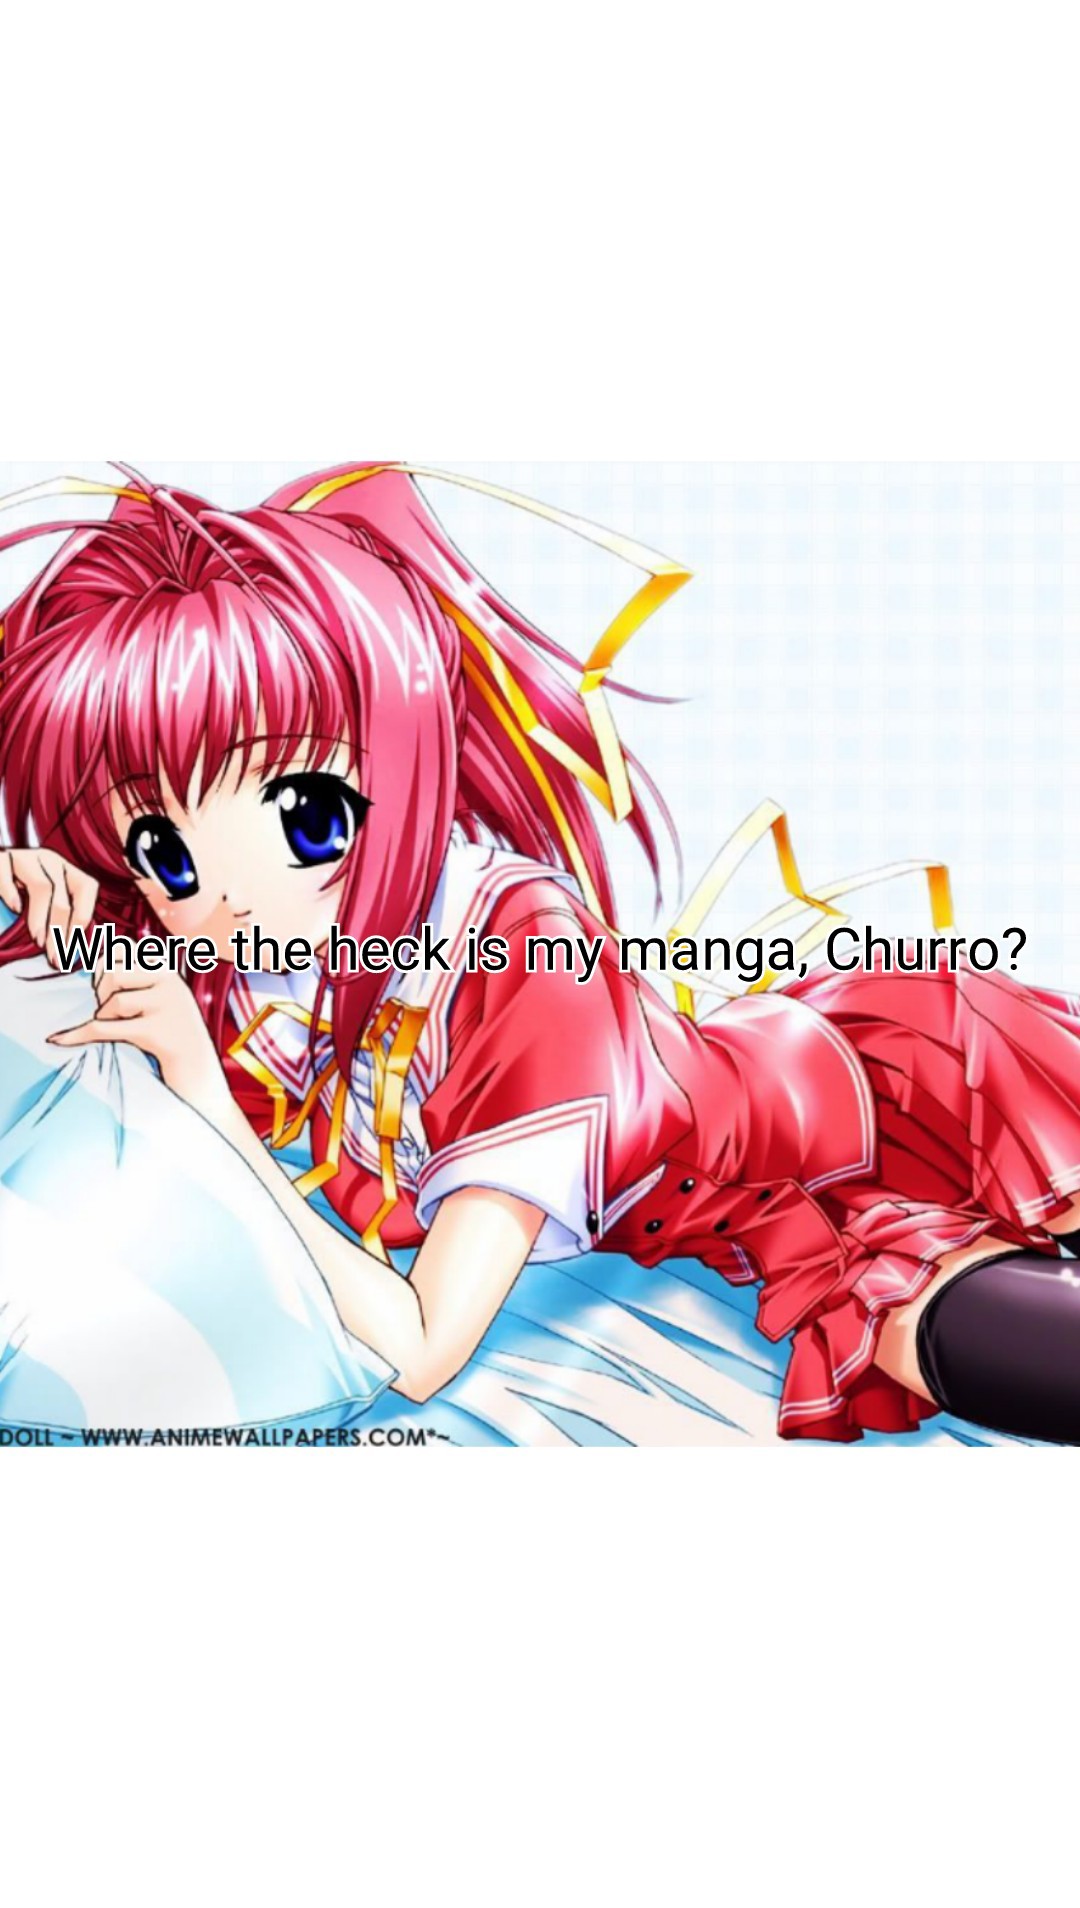 Where the heck is my manga, Churro?